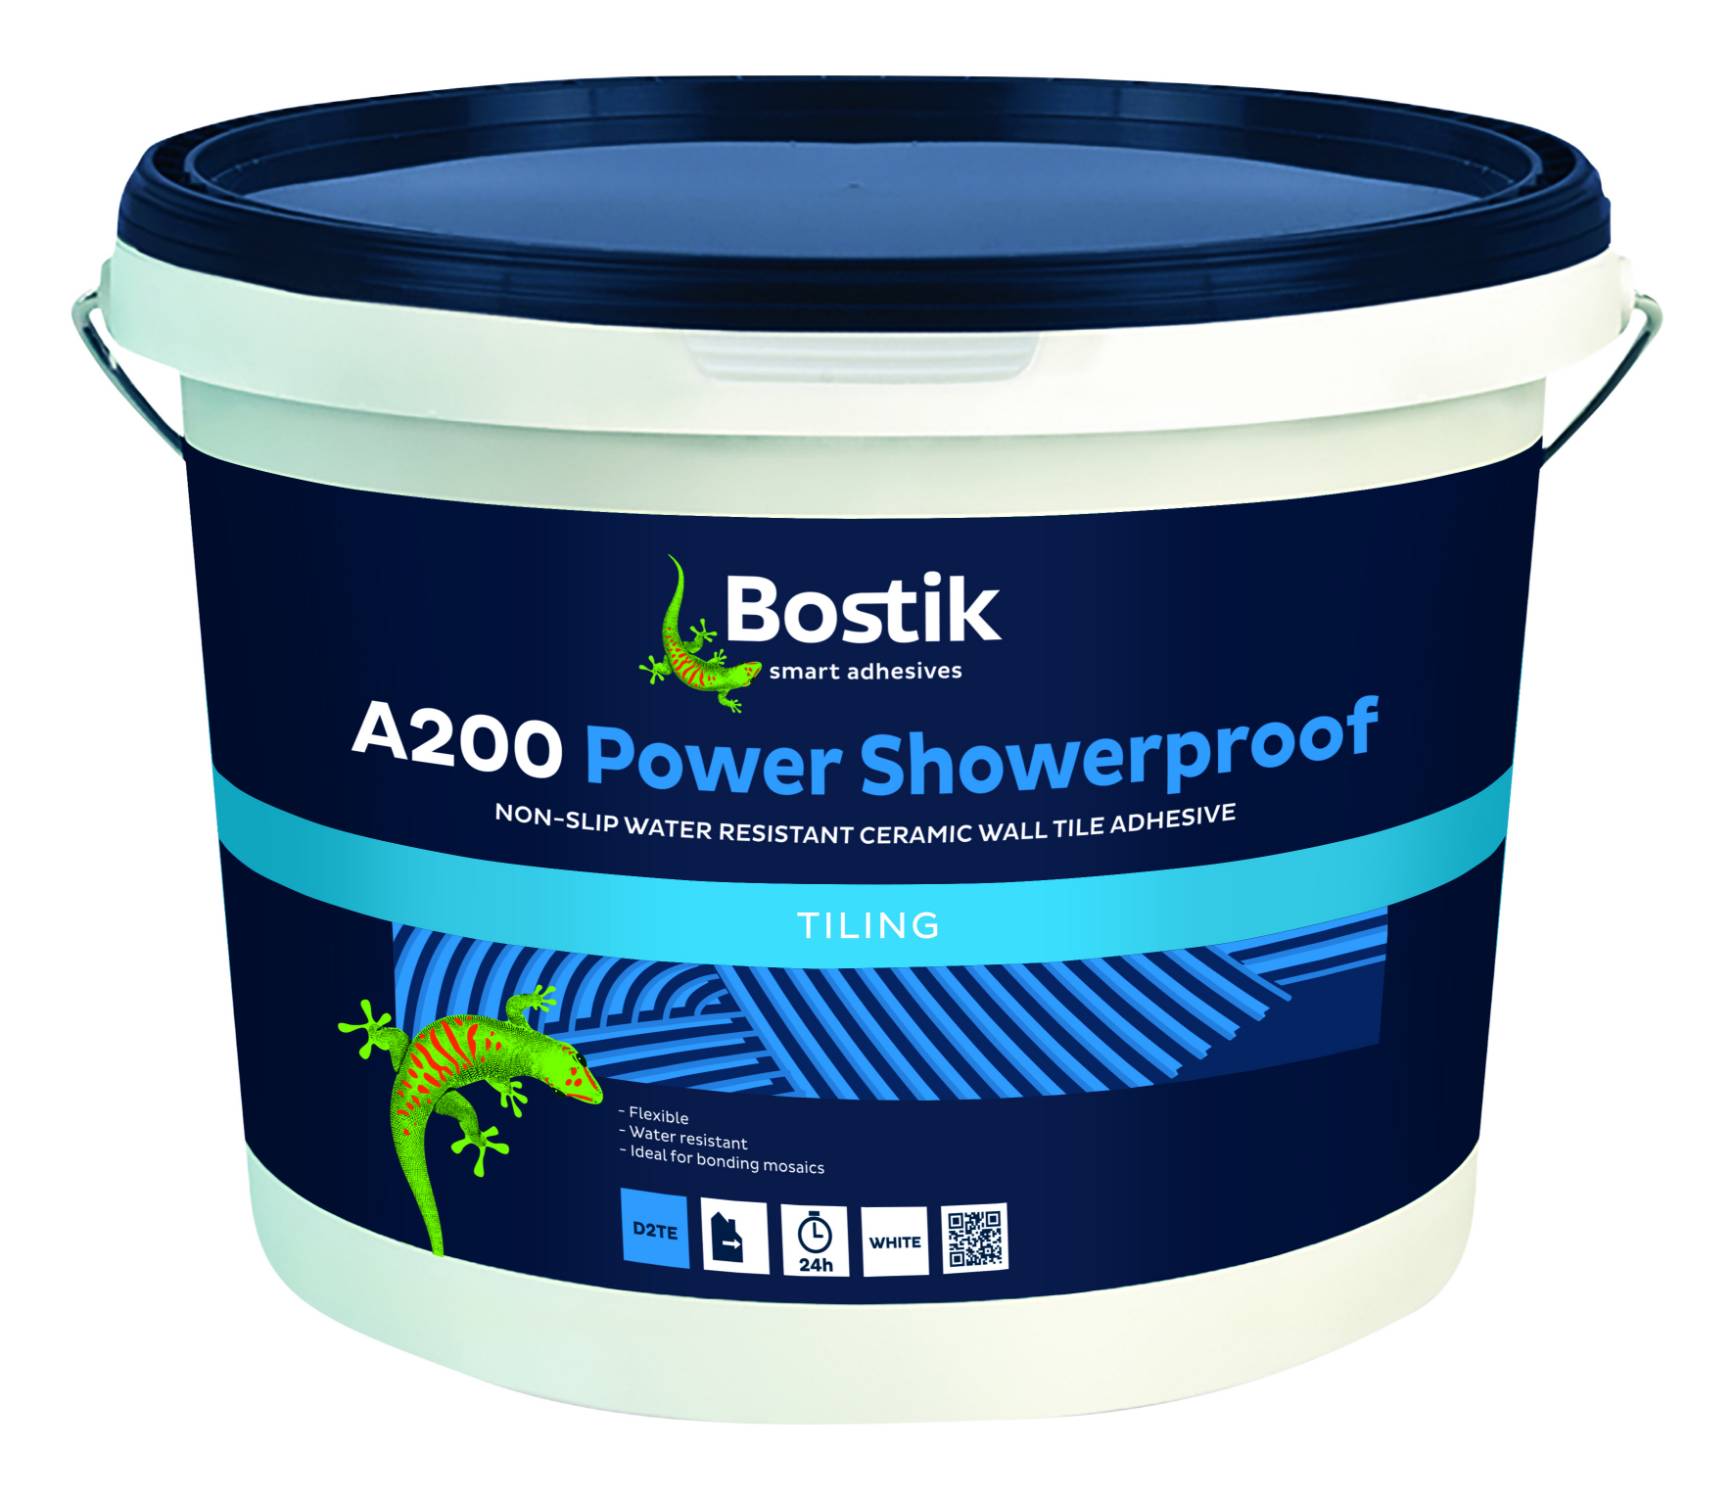 Bostik A200 Power Showerproof Tiling Adhesive